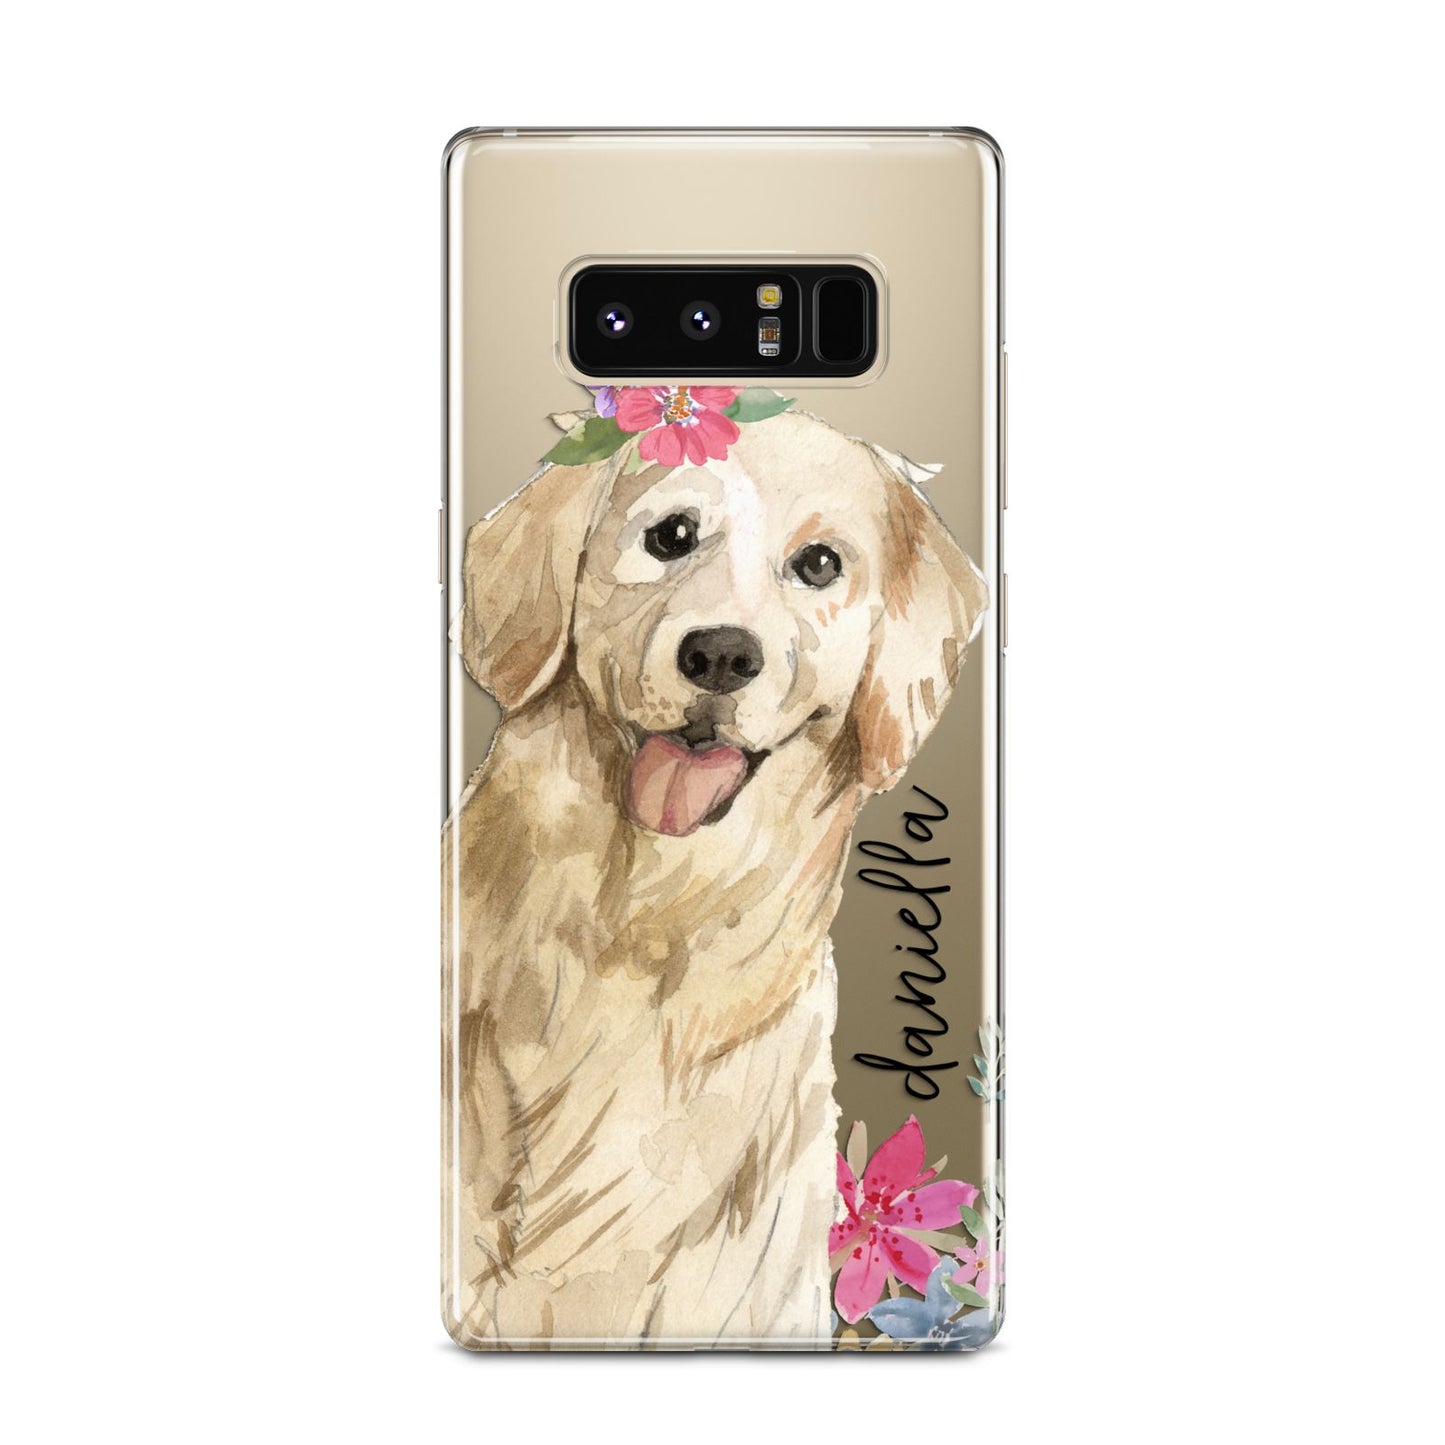 Personalised Golden Retriever Dog Samsung Galaxy Note 8 Case